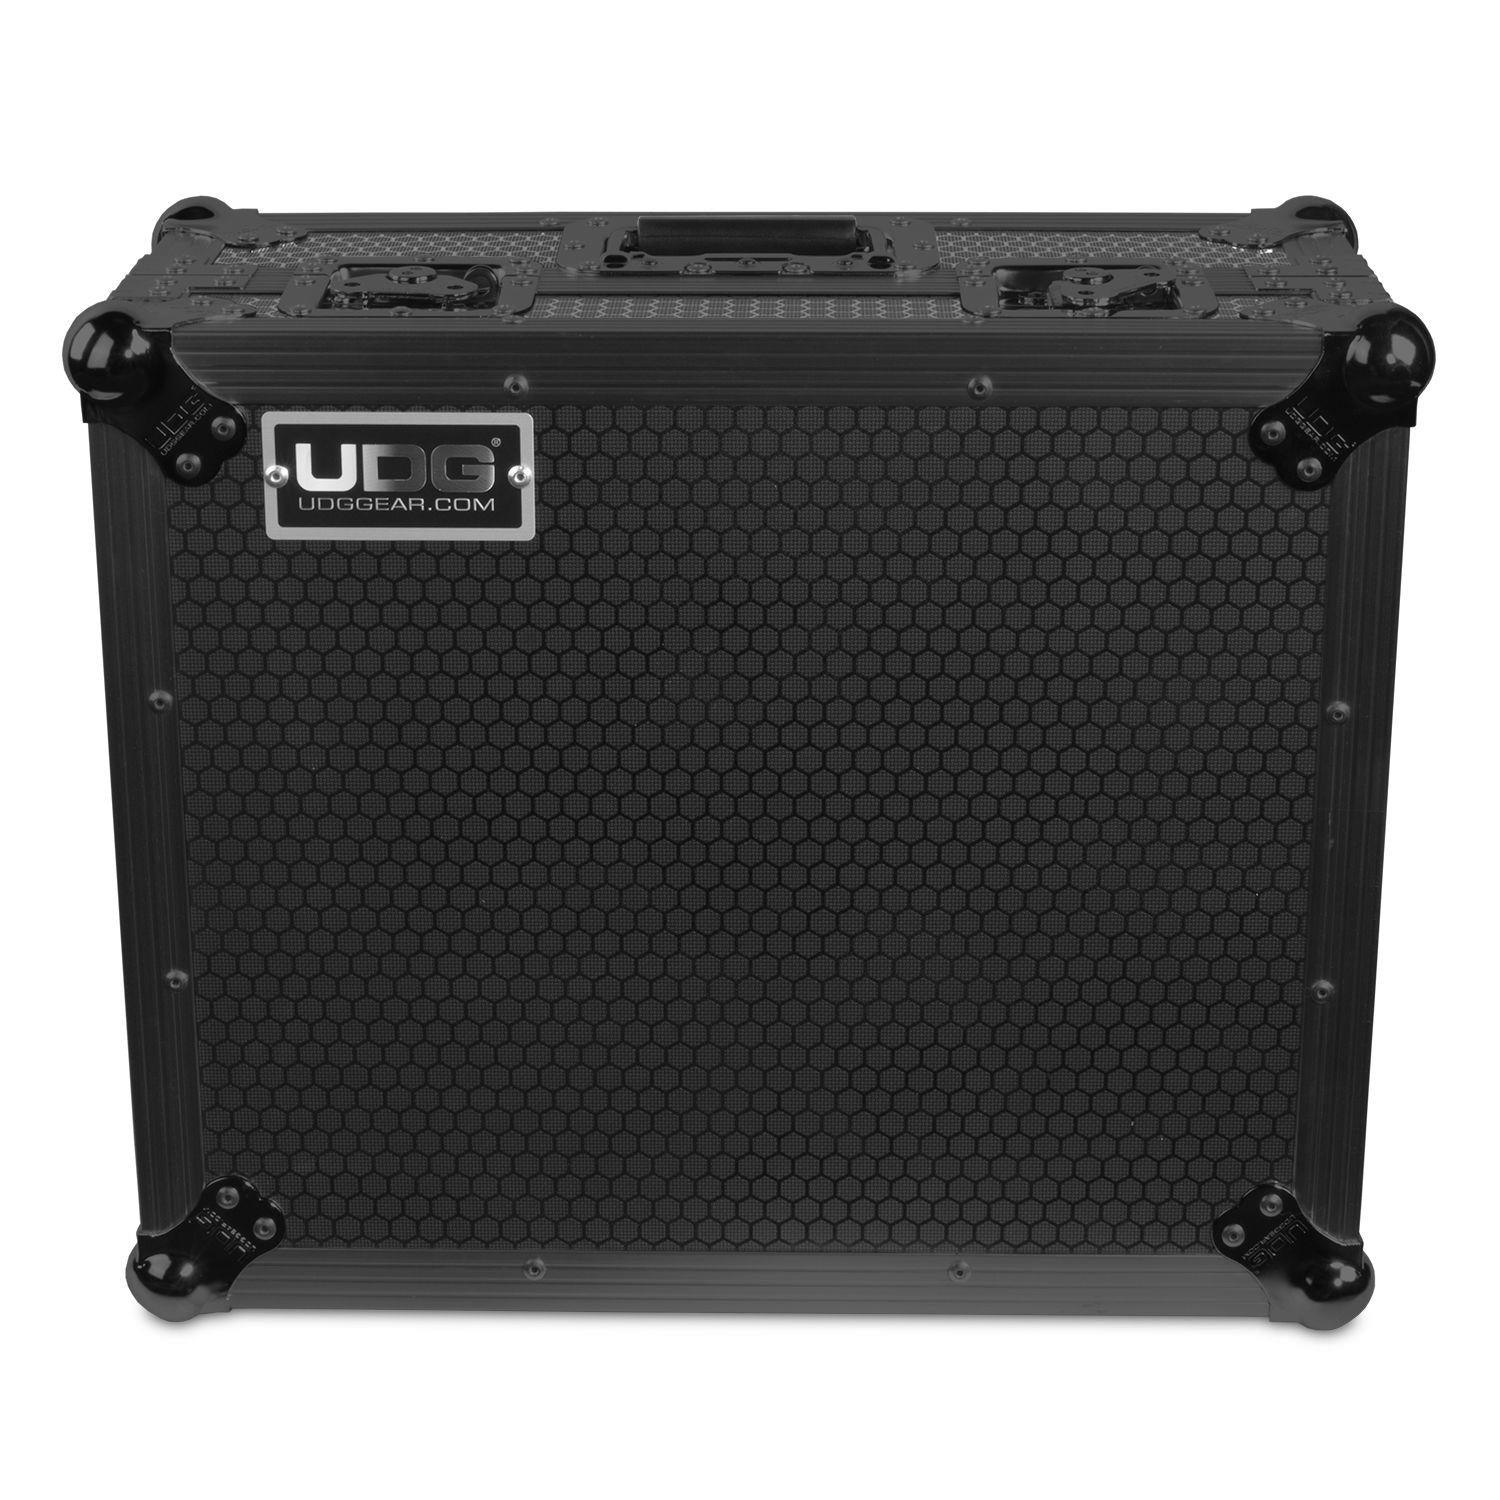 UDG Ultimate Flight Case Multi Format Turntable Black MK2 - DY Pro Audio